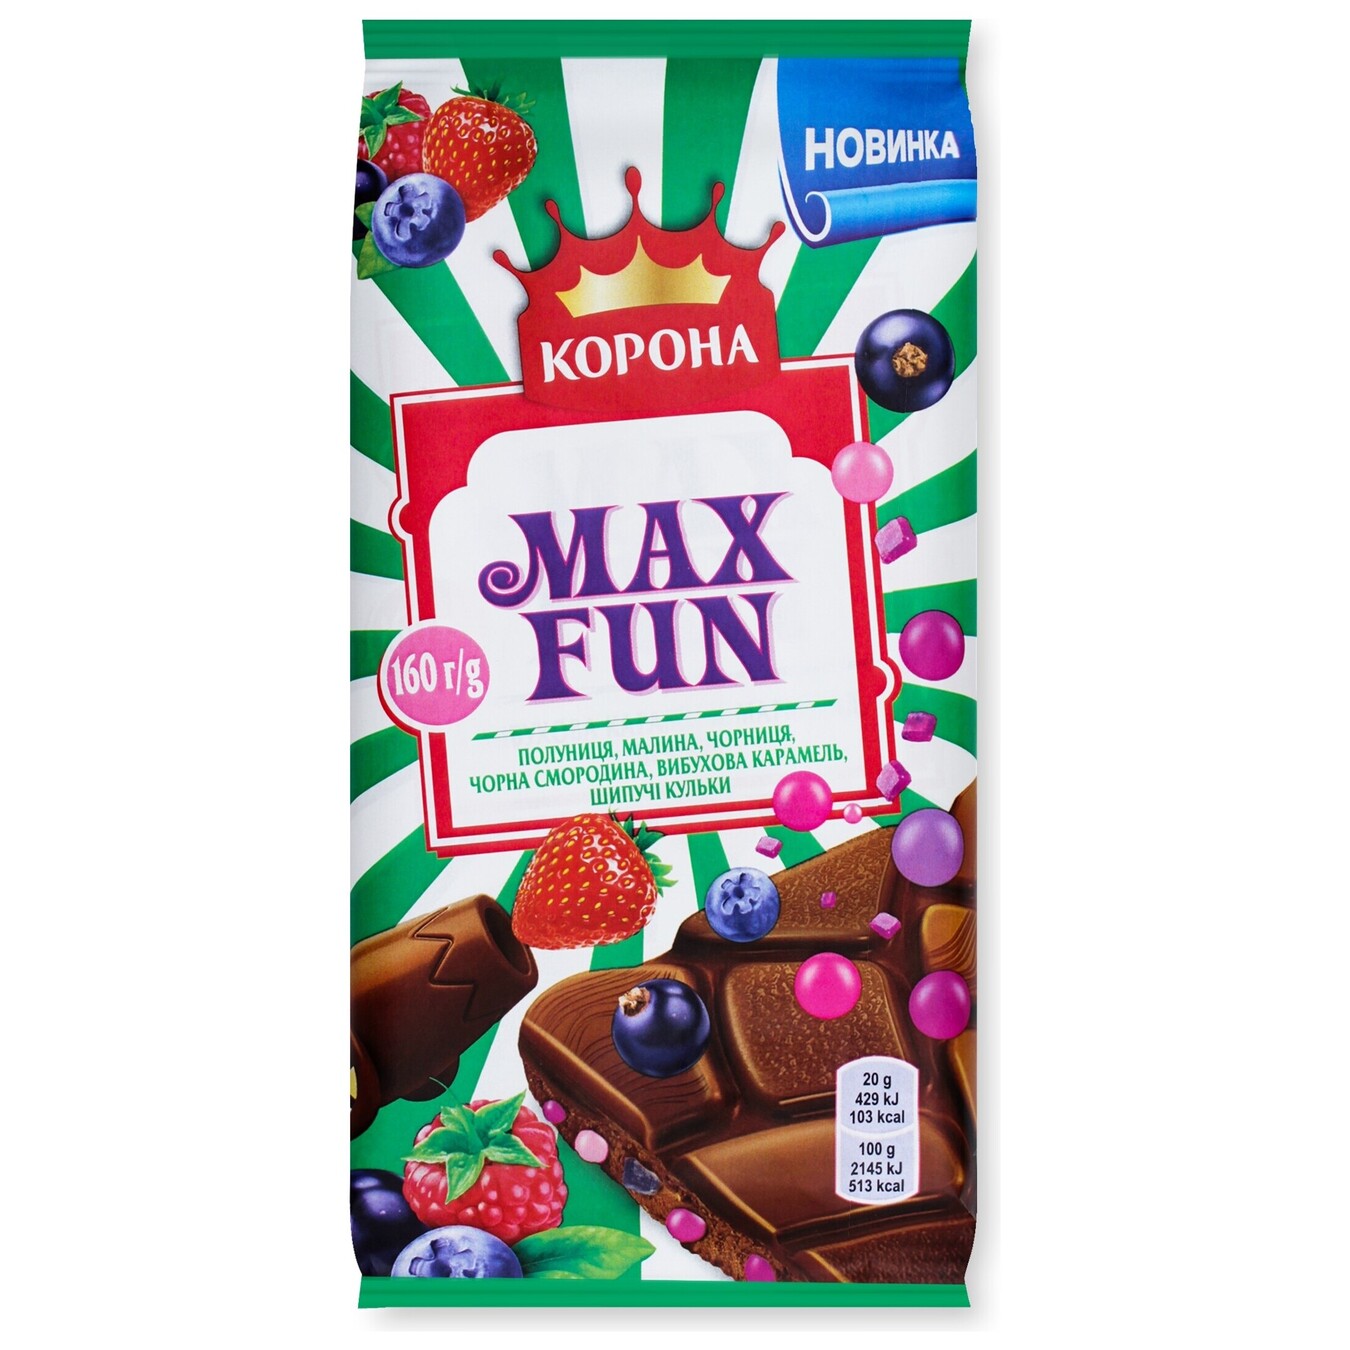 Korona Max Fun Milk Chocolate with Strawberries Raspberries Blueberries Black Currants Explosive Caramel and Effervescent Balls 150g